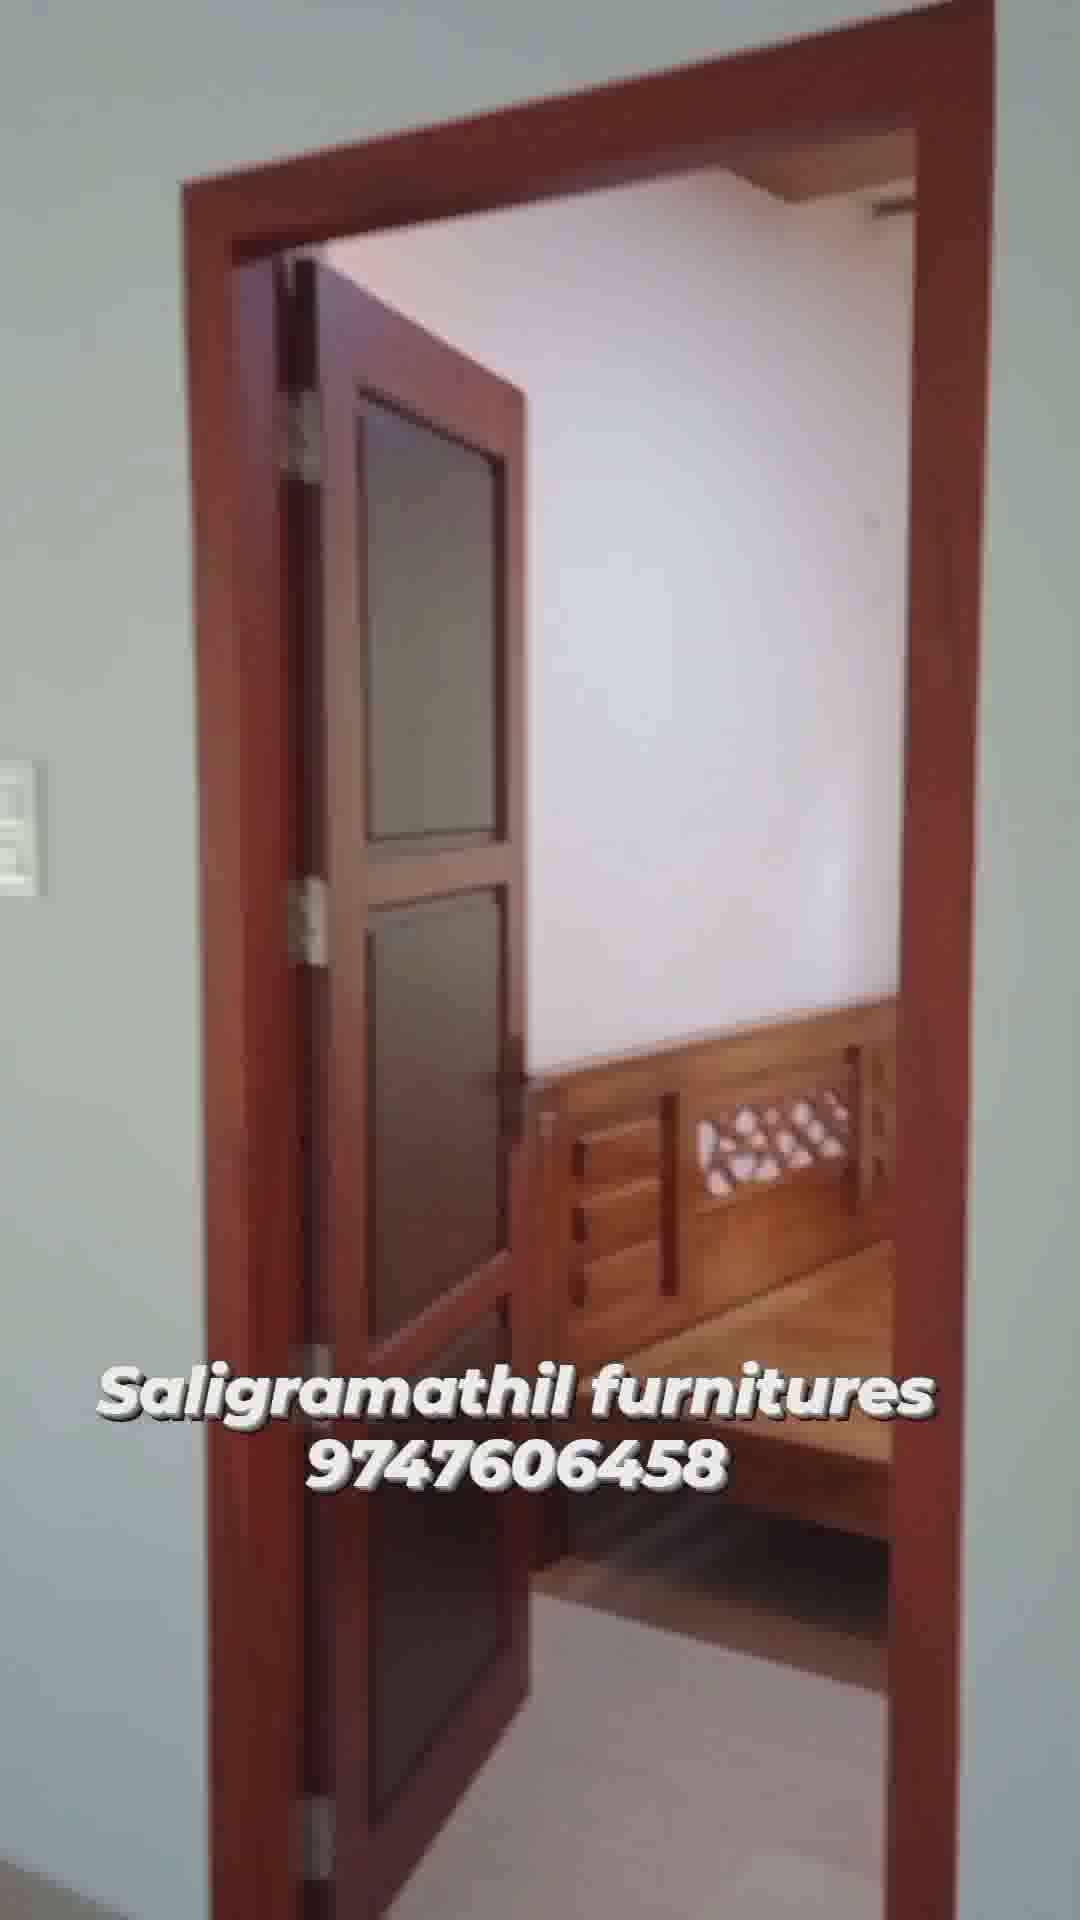 customised bedroom 
saligramathil furnitures
 @naduvannur
 #saligramathil  #custamizedwork  #BedroomDecor  #HouseDesigns  #InteriorDesigner  #furnitures  #happycoustomer  #Kerala  #Woodenfurniture